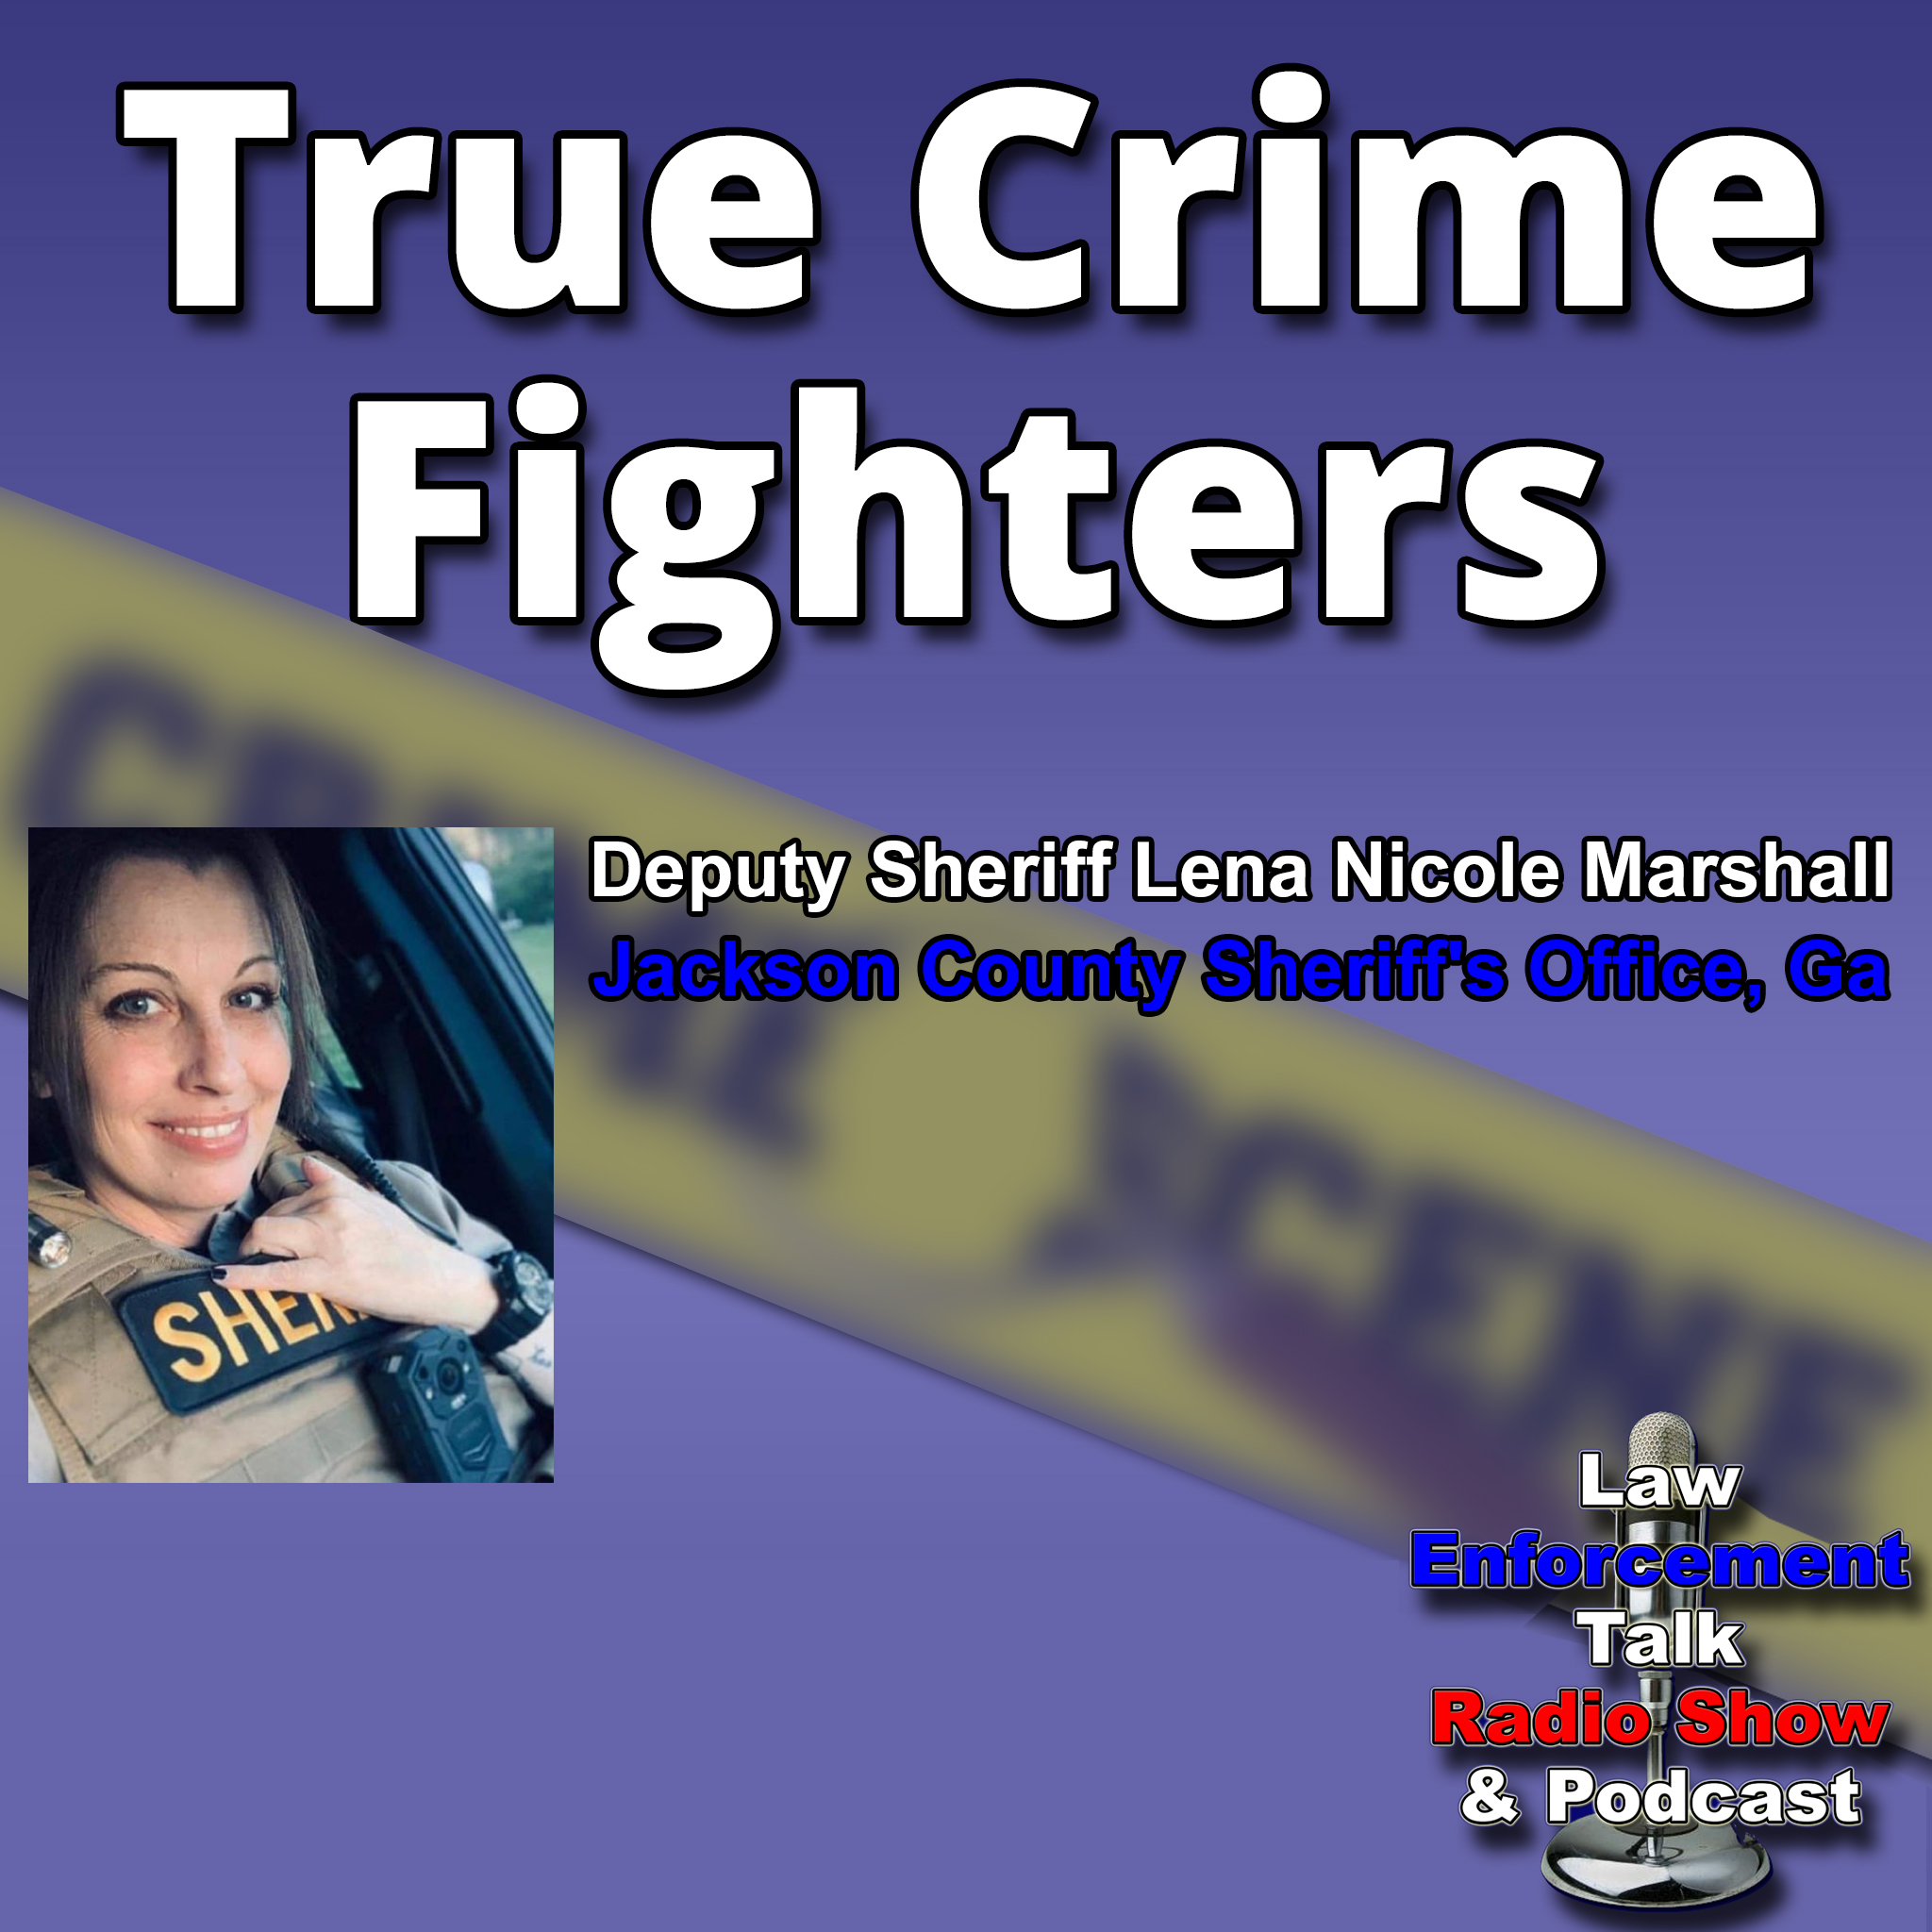 Female Deputy Killed - Lena Nicole Marshall